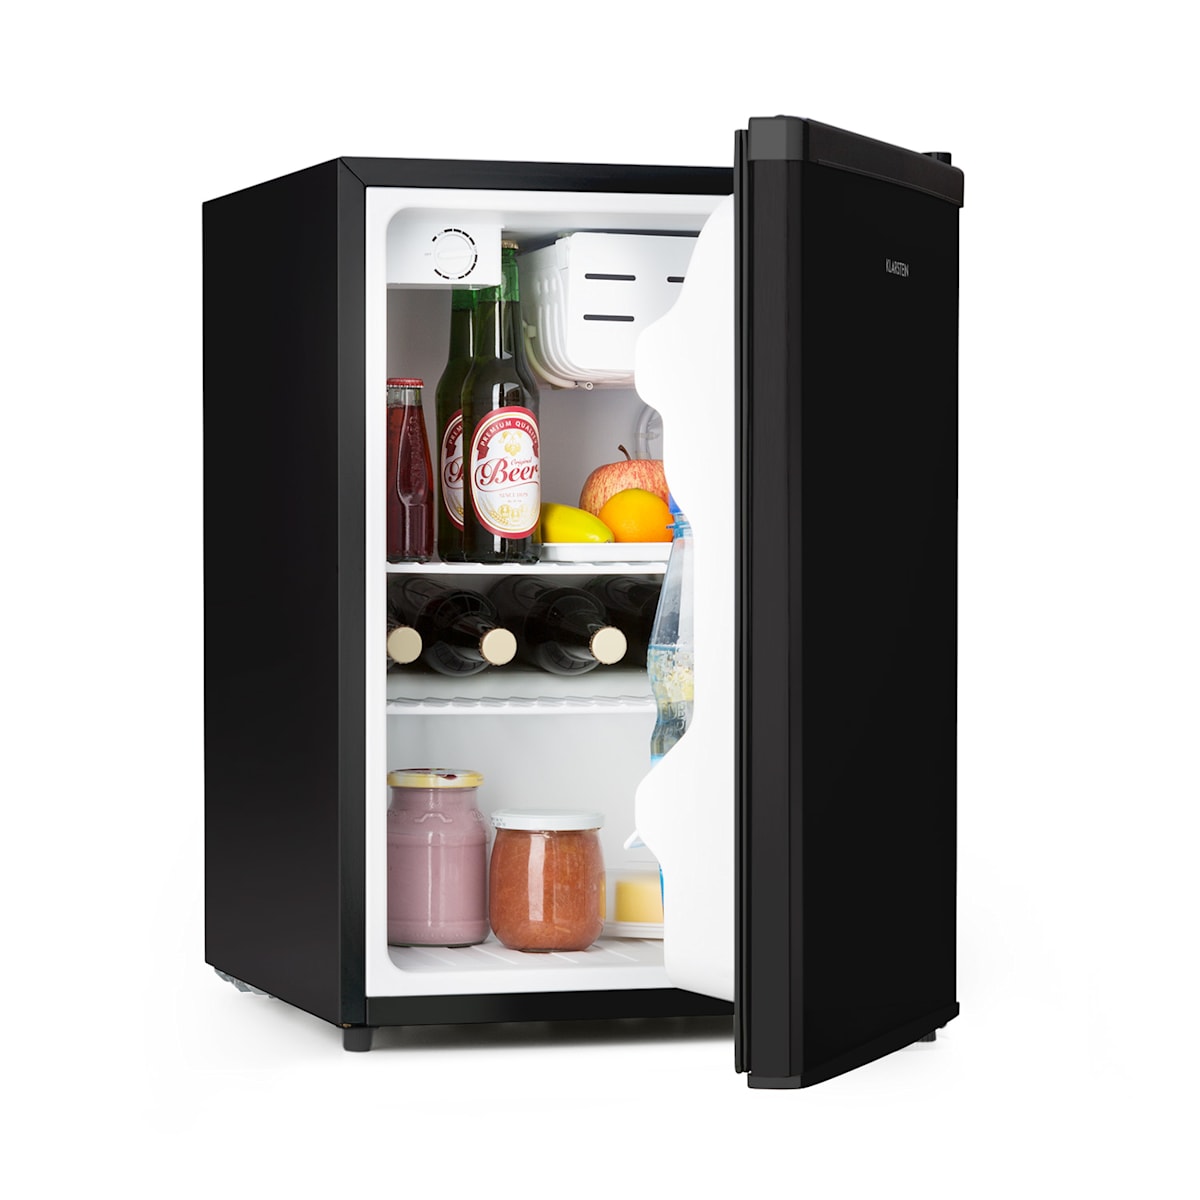 Eosnow Auto-Kühlschrank, 4 Liter, robuste ABS-Kosmetikaufbewahrung,  abnehmbare Trennwand, tragbarer Mini-Kühlschrank für Lebensmittel, Kosmetik